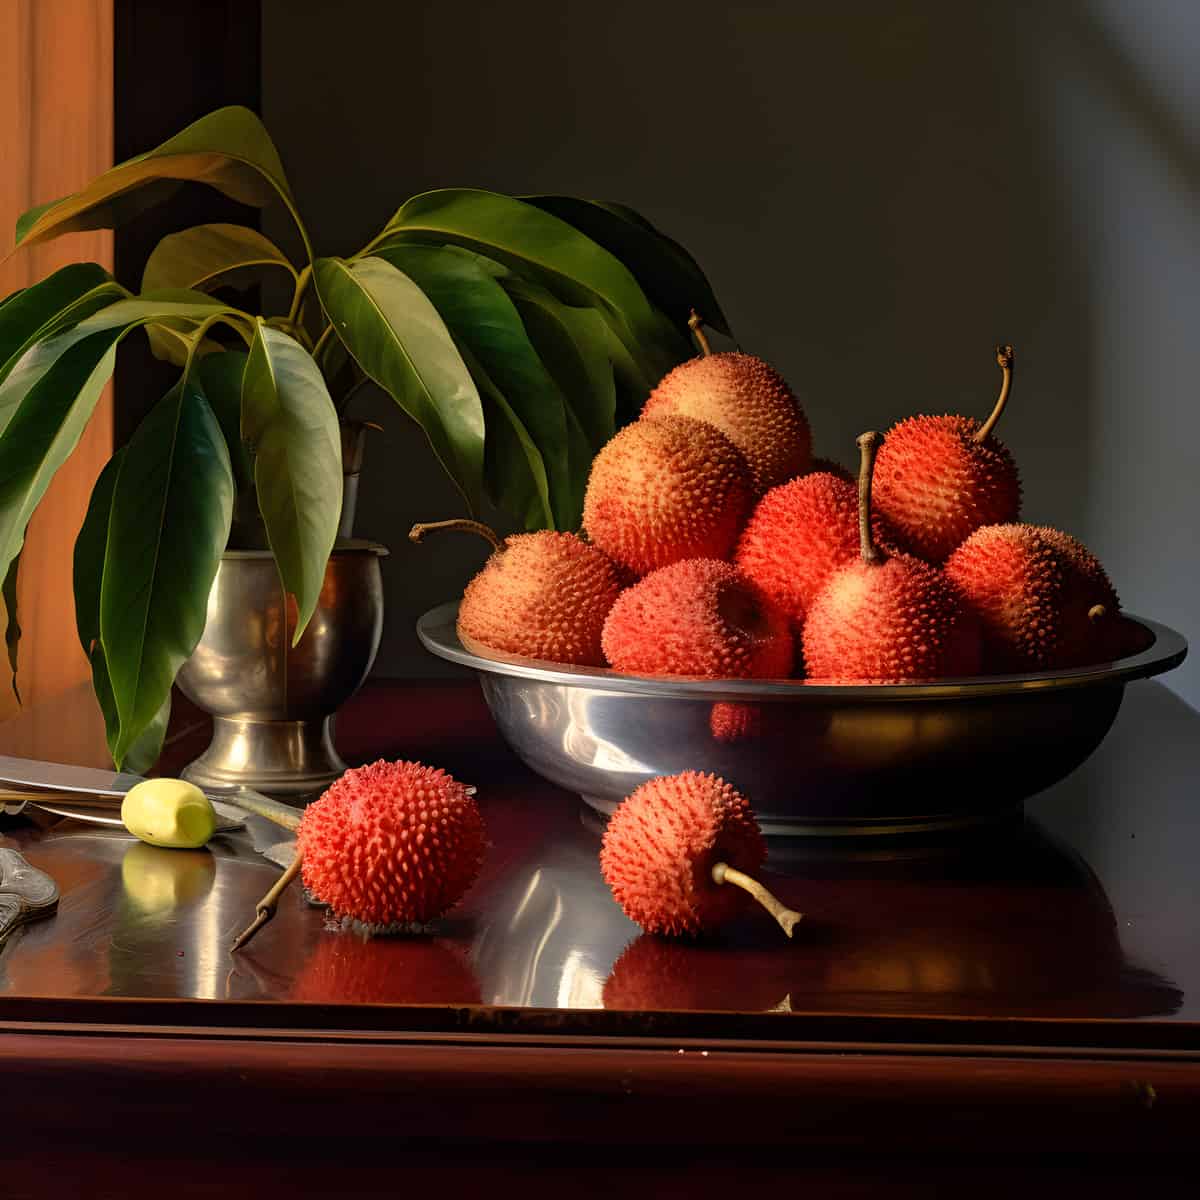 Pulasan Fruit on a kitchen counter